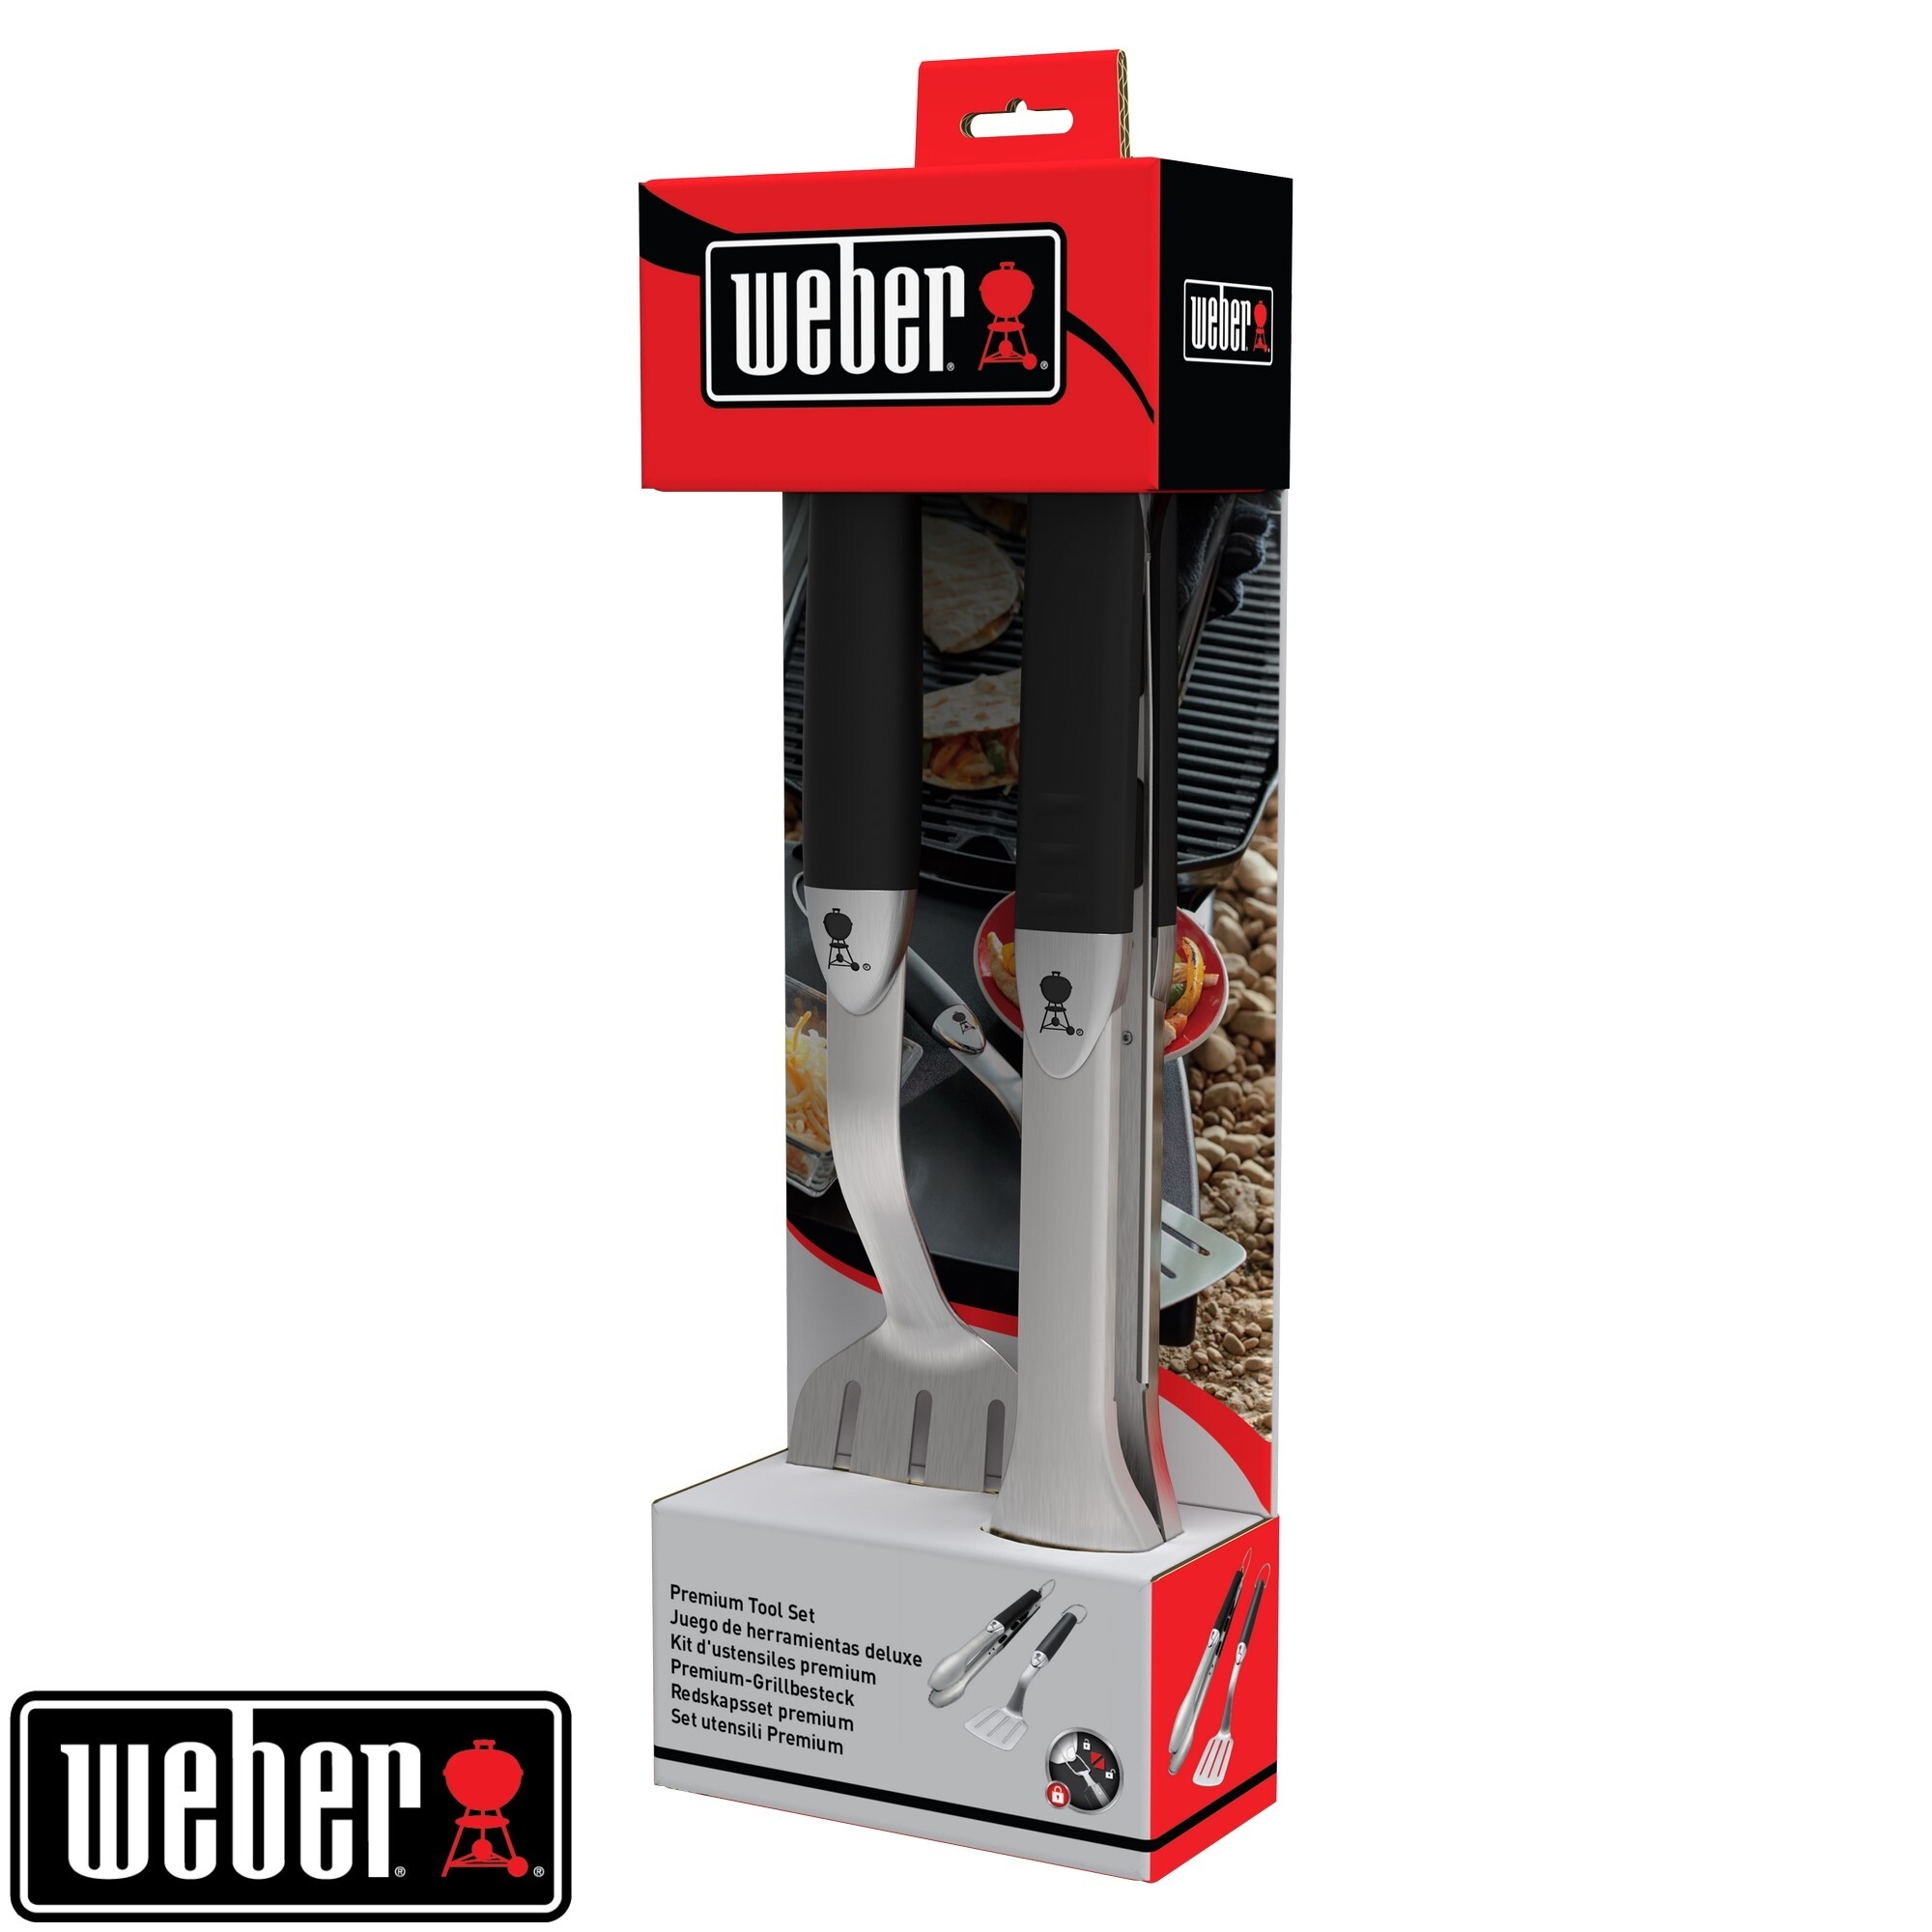 Weber Premium Grillbesteck Kompakt